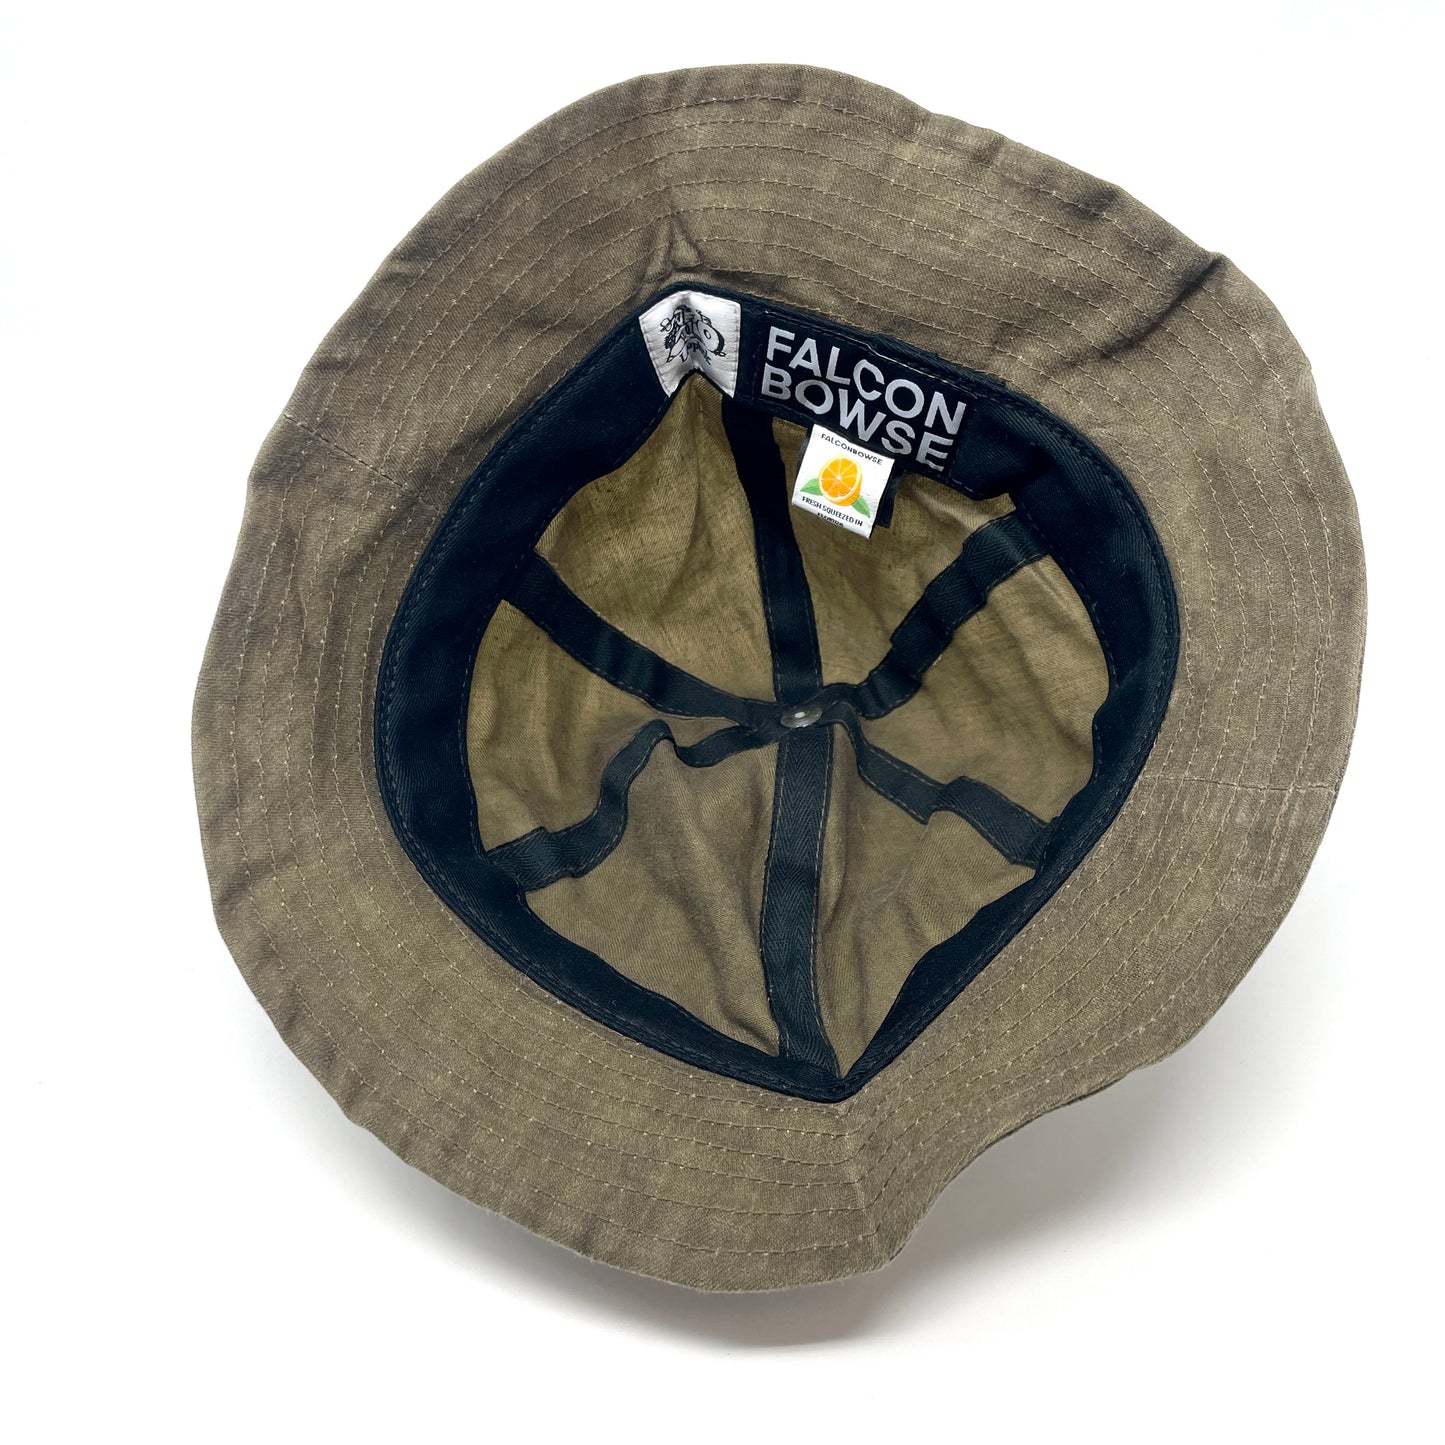 Loophole x Falcon Bowse Bucket Hat - Khaki